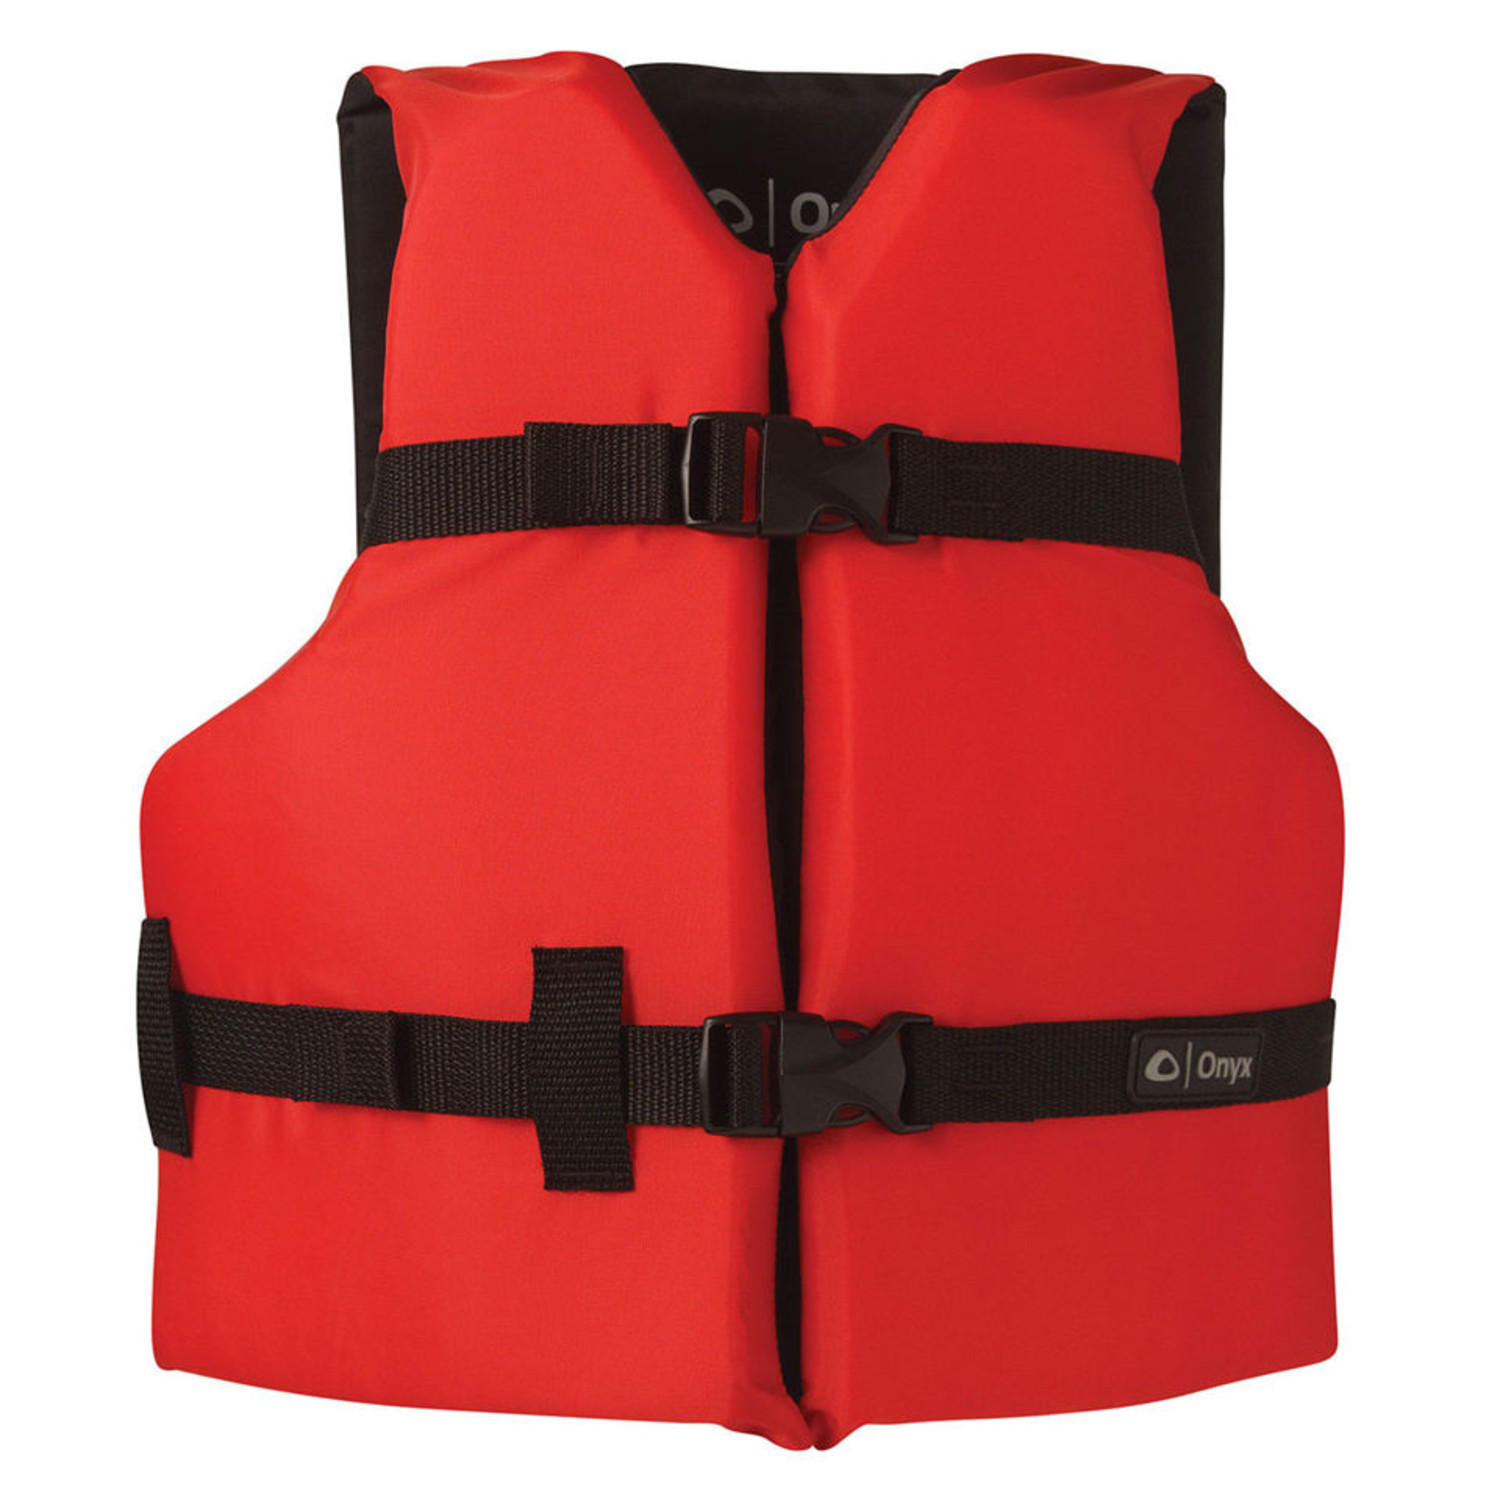 Onyx General Purpose Life Jacket - Fin-atics Marine Supply Ltd. Inc.